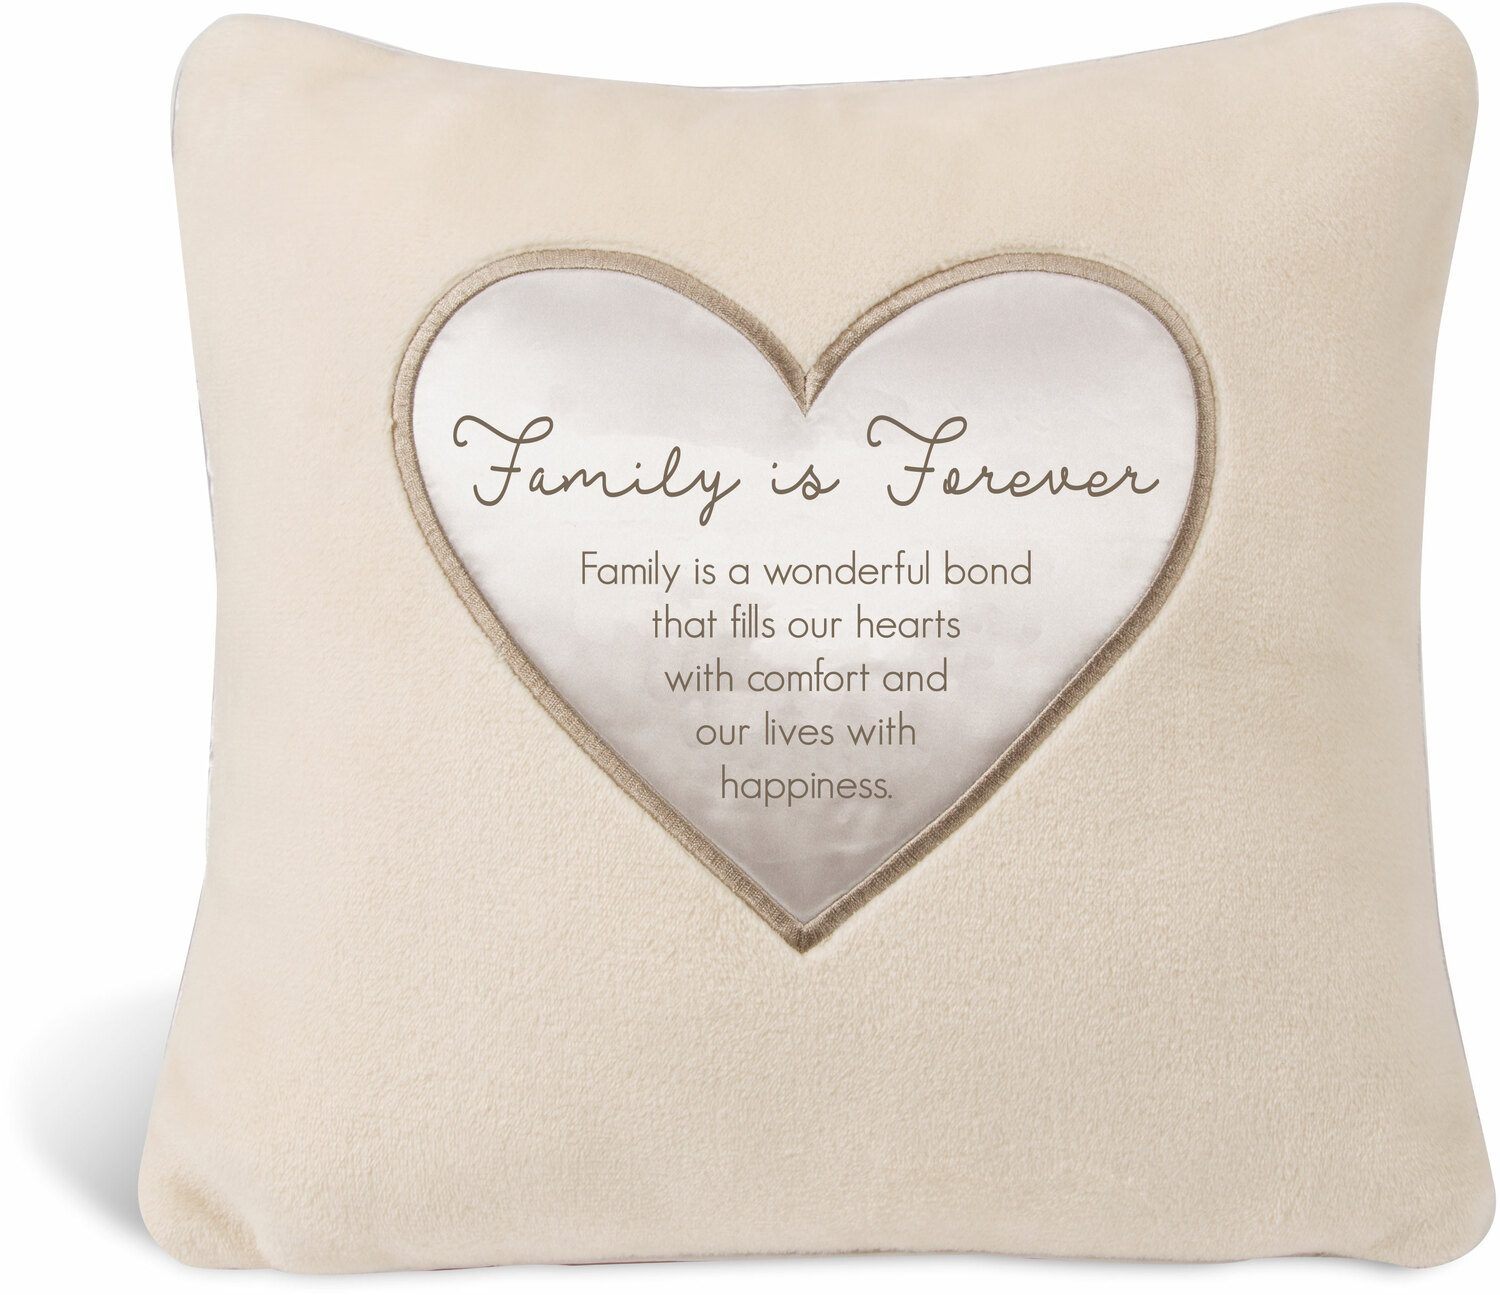 Family by Comfort Blanket - Family - 16" Royal Plush Pillow